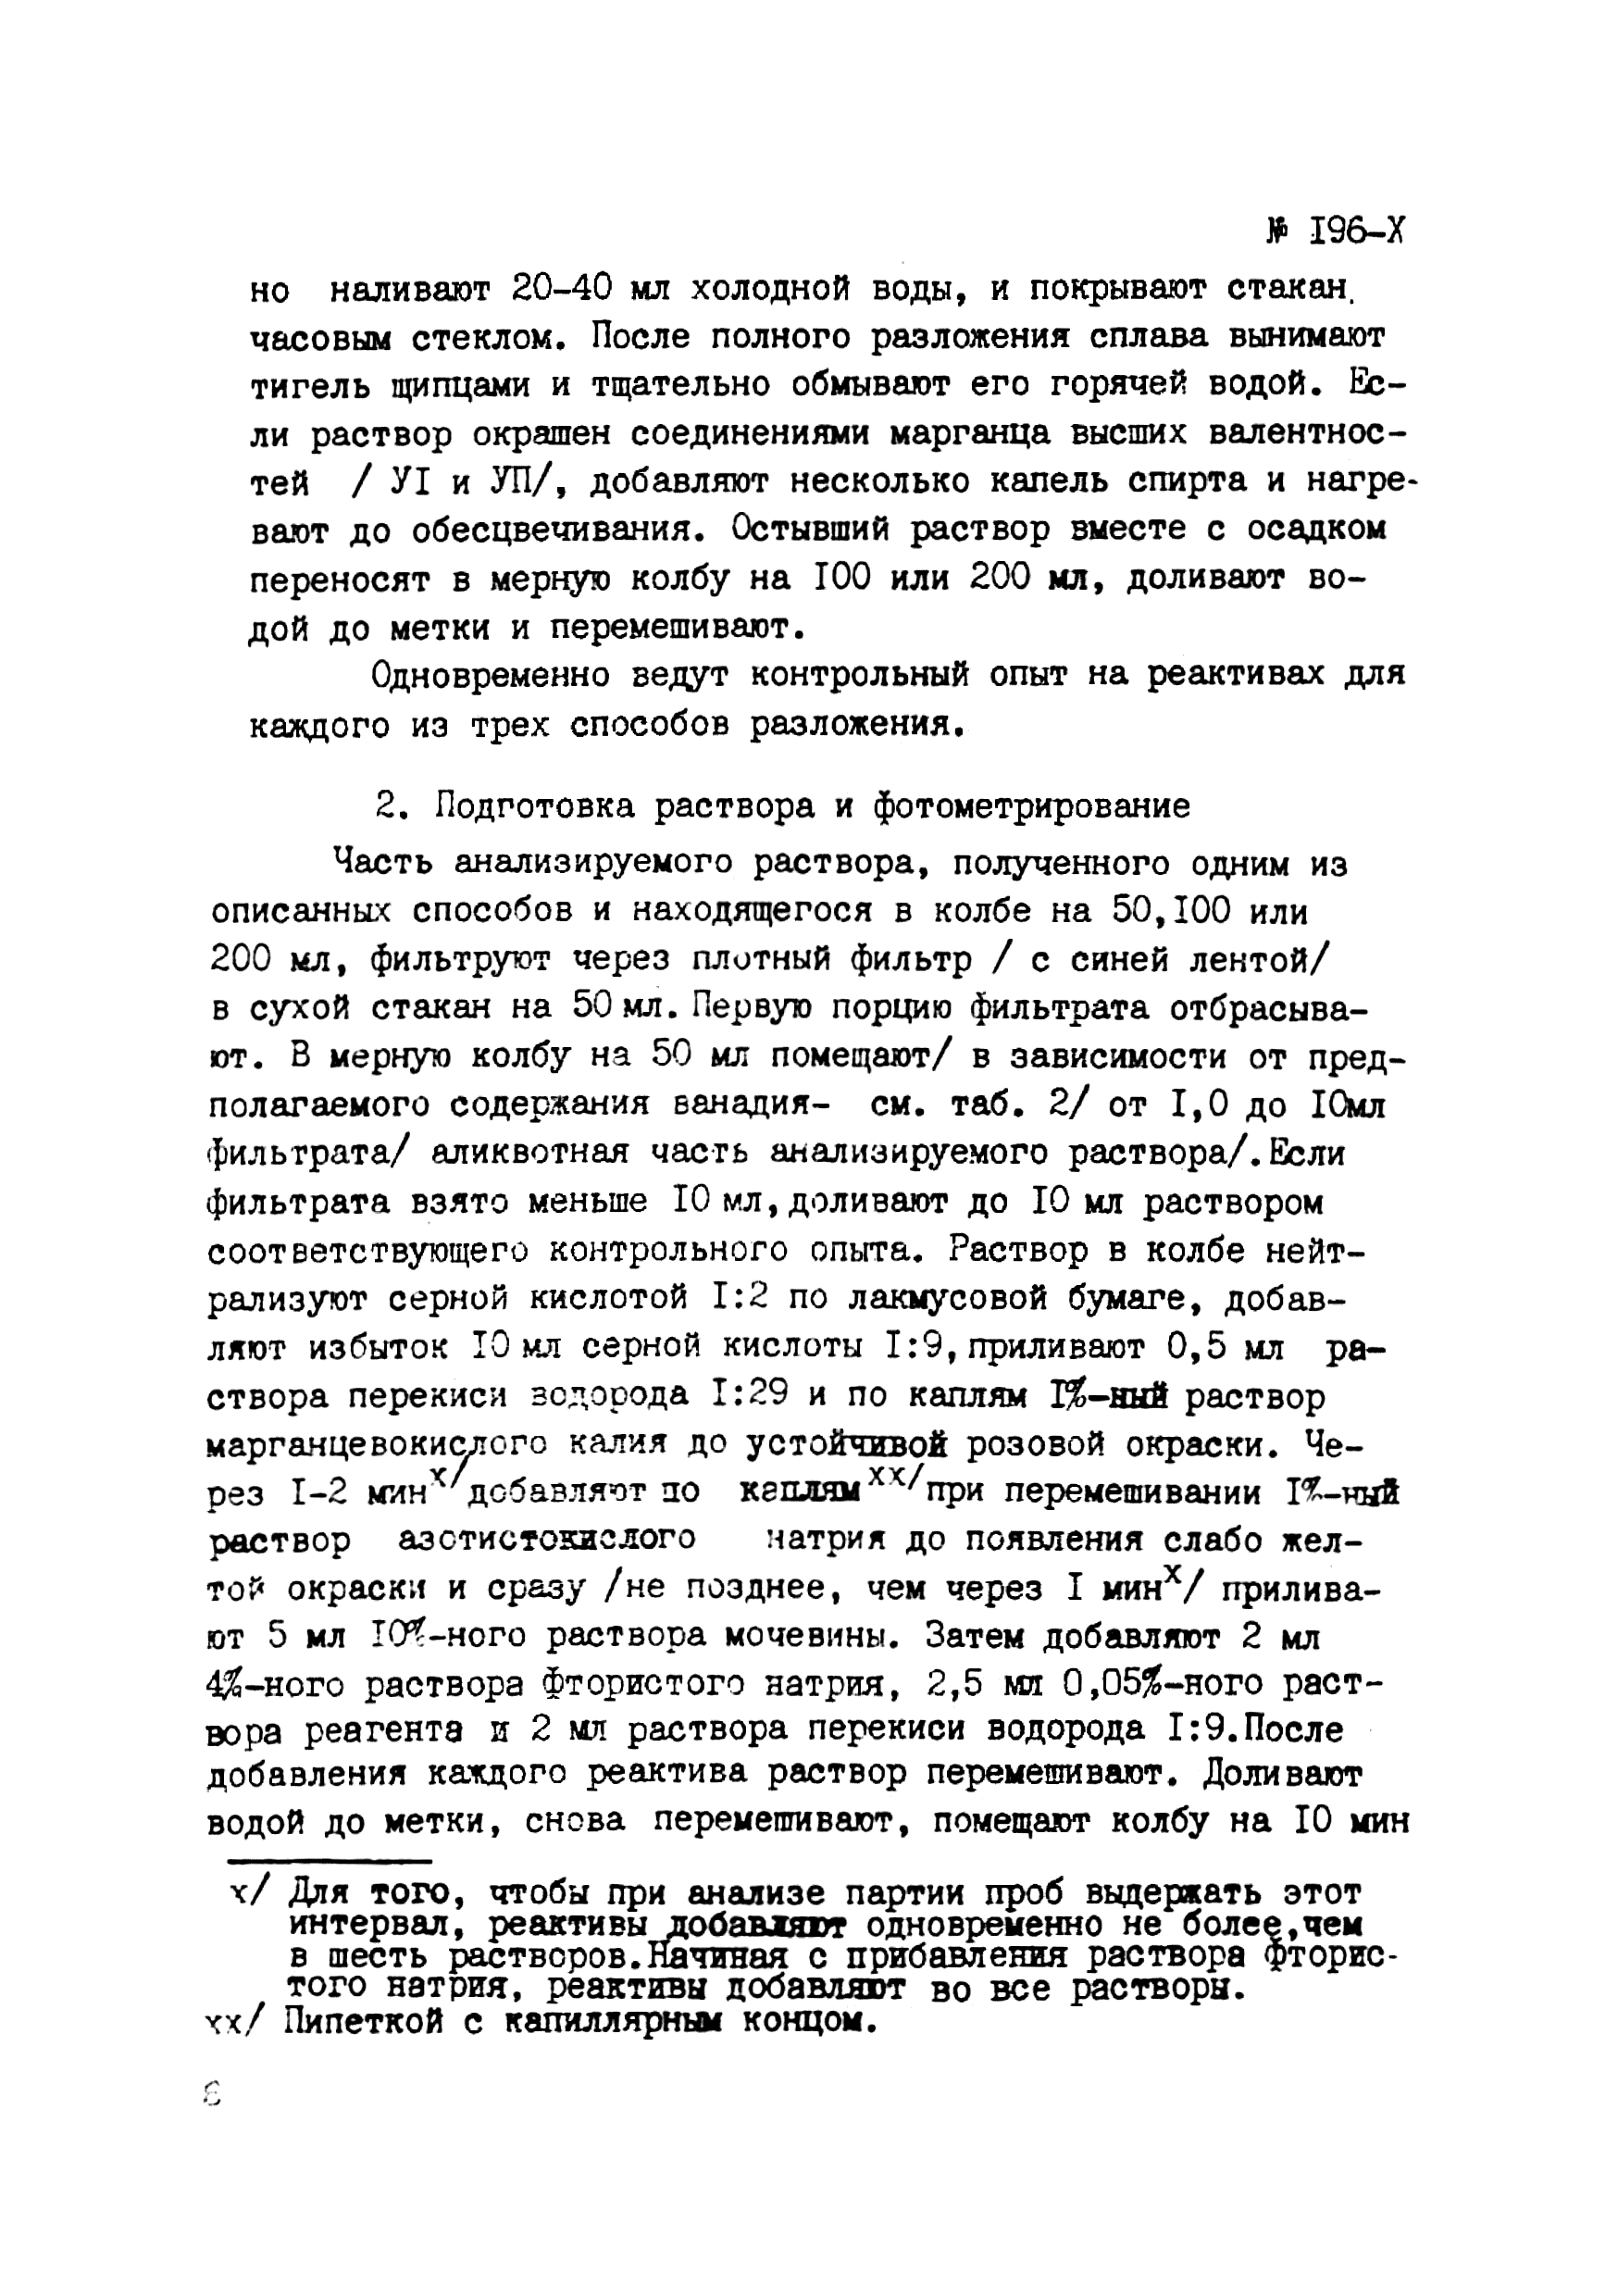 Инструкция НСАМ 196-Х